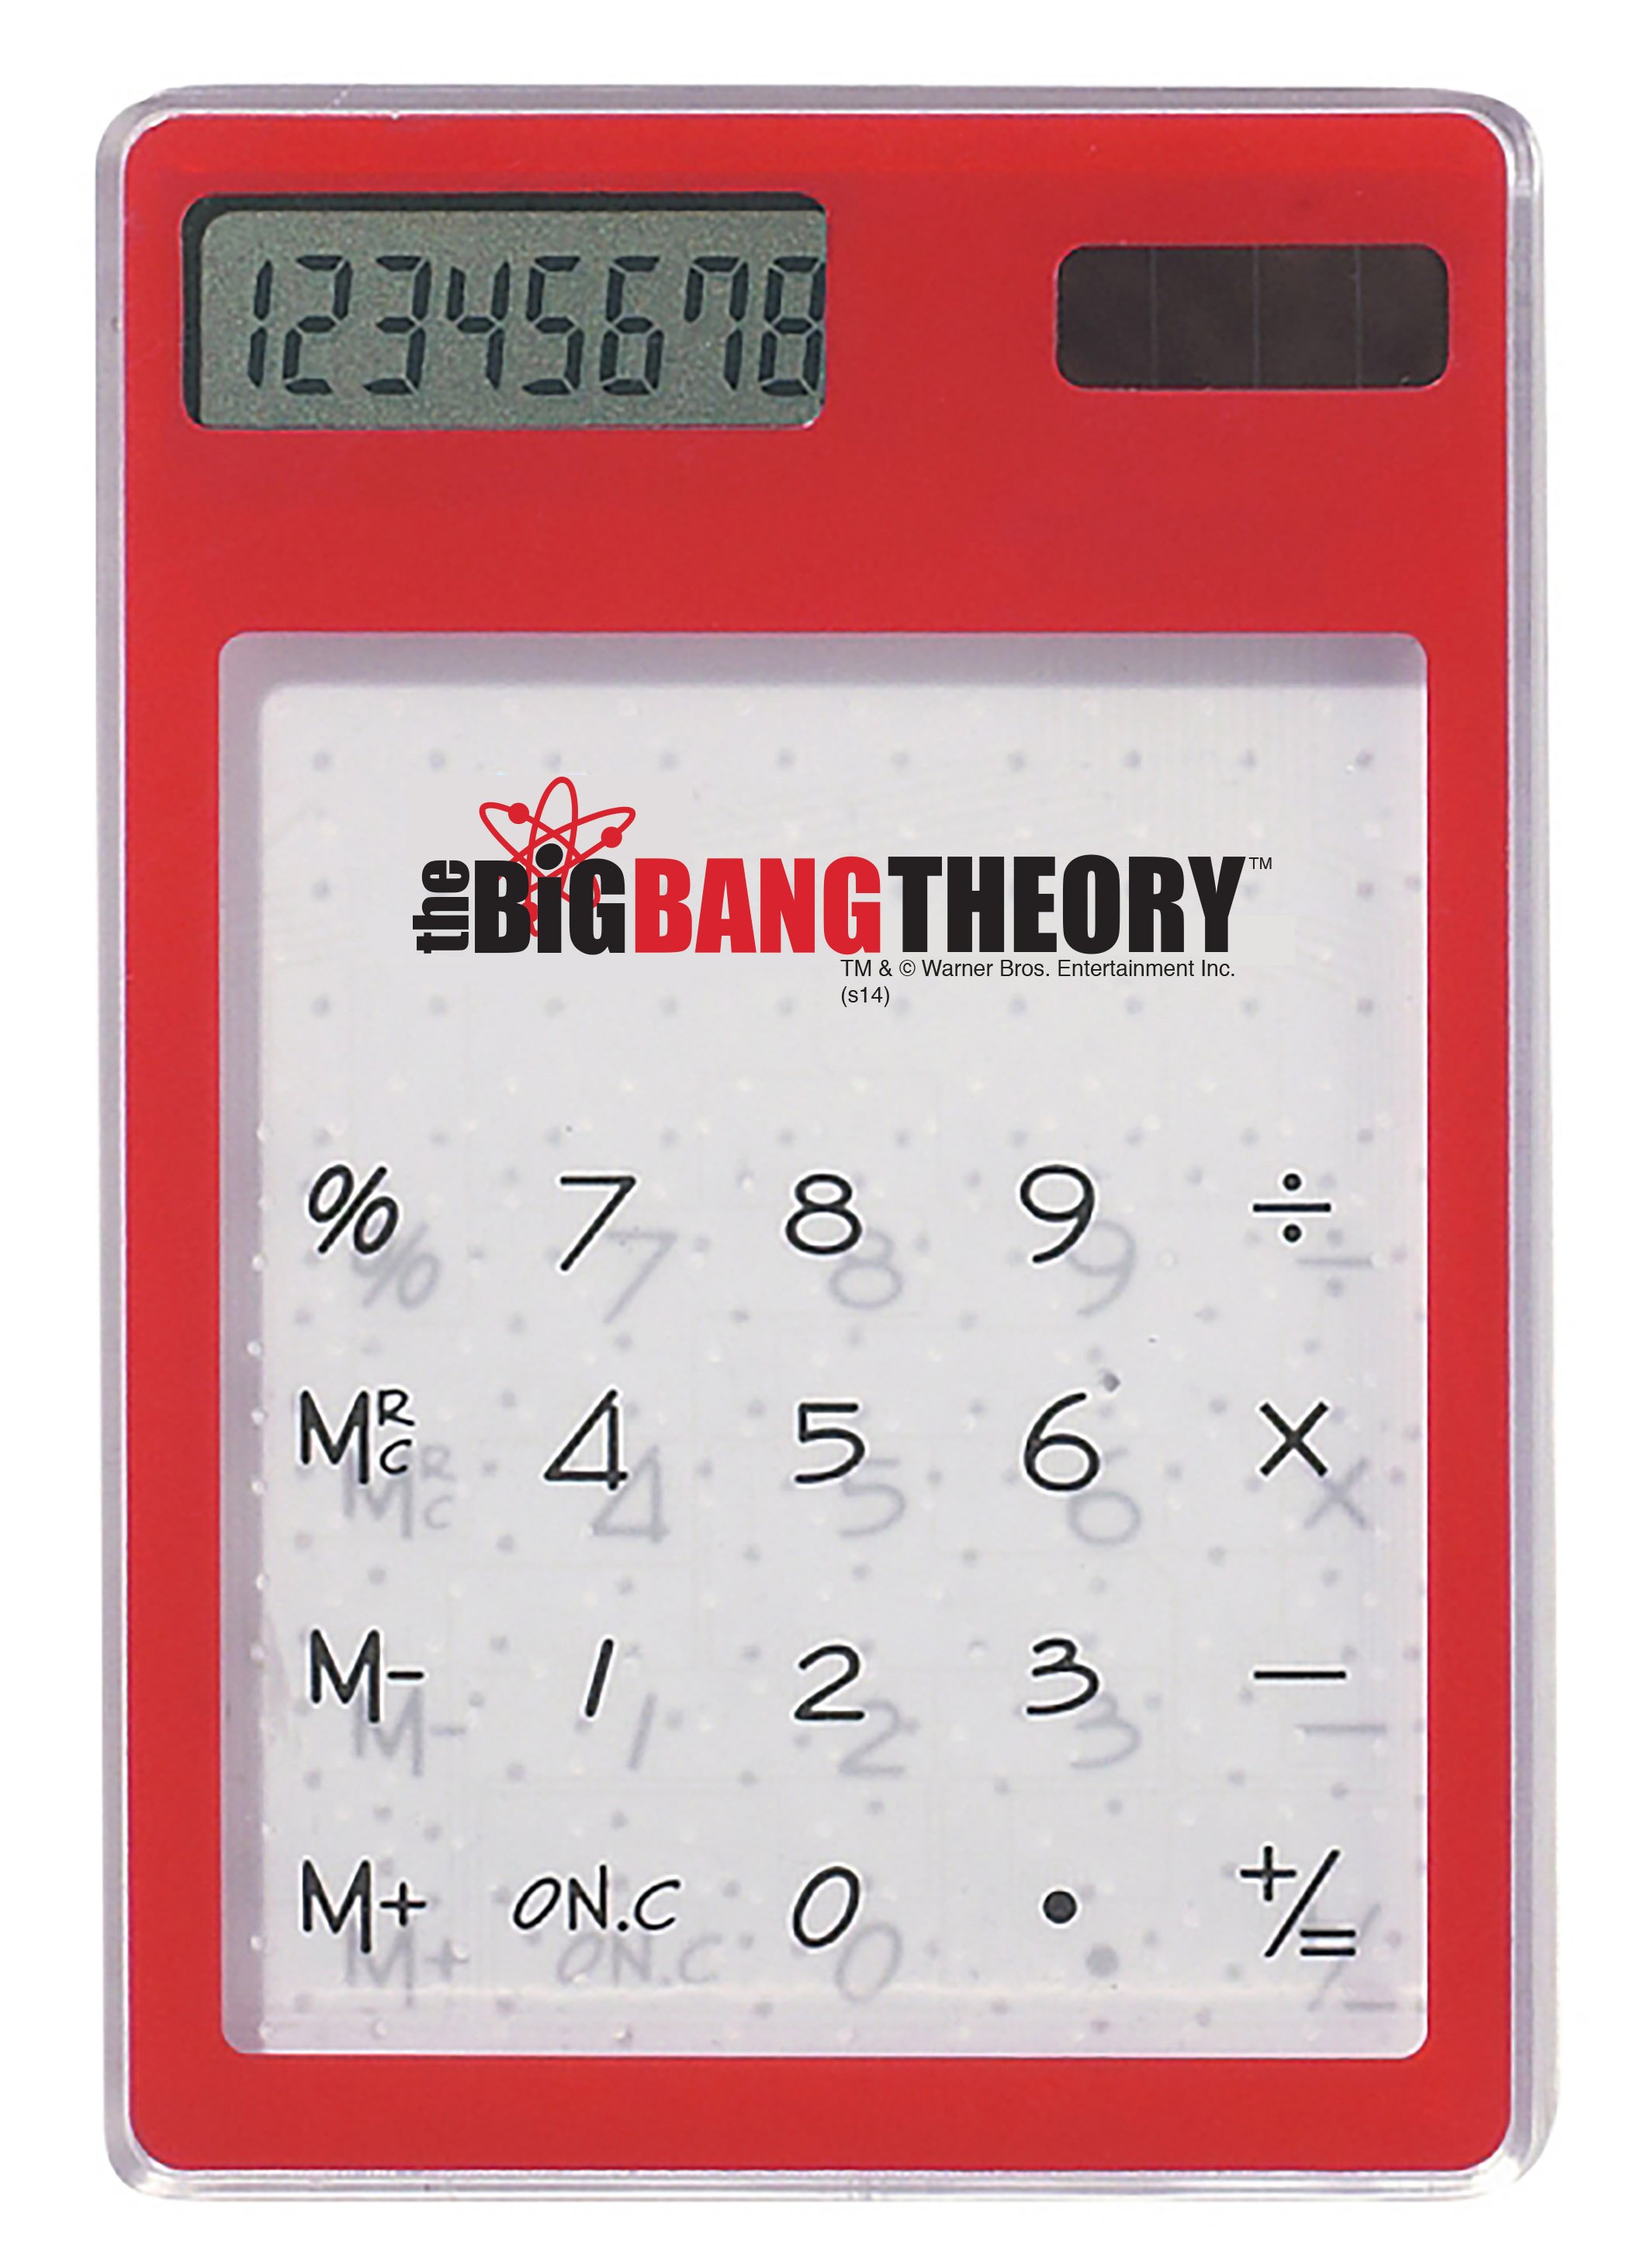 Big Bang Theory_calculator copy.jpg